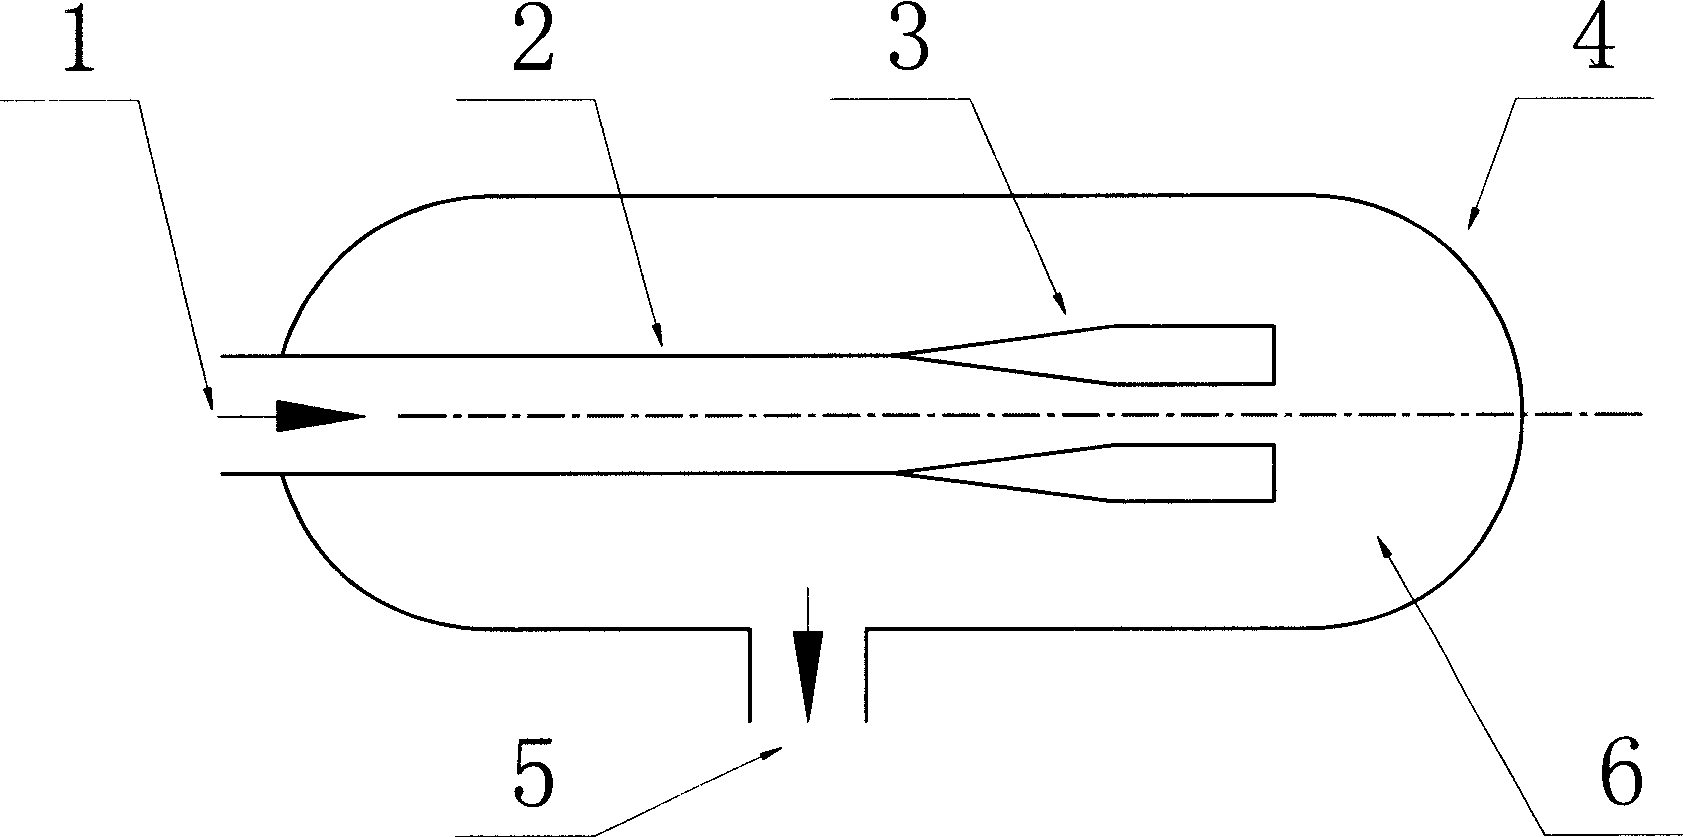 Pulsation air current vibration-damping arrangement